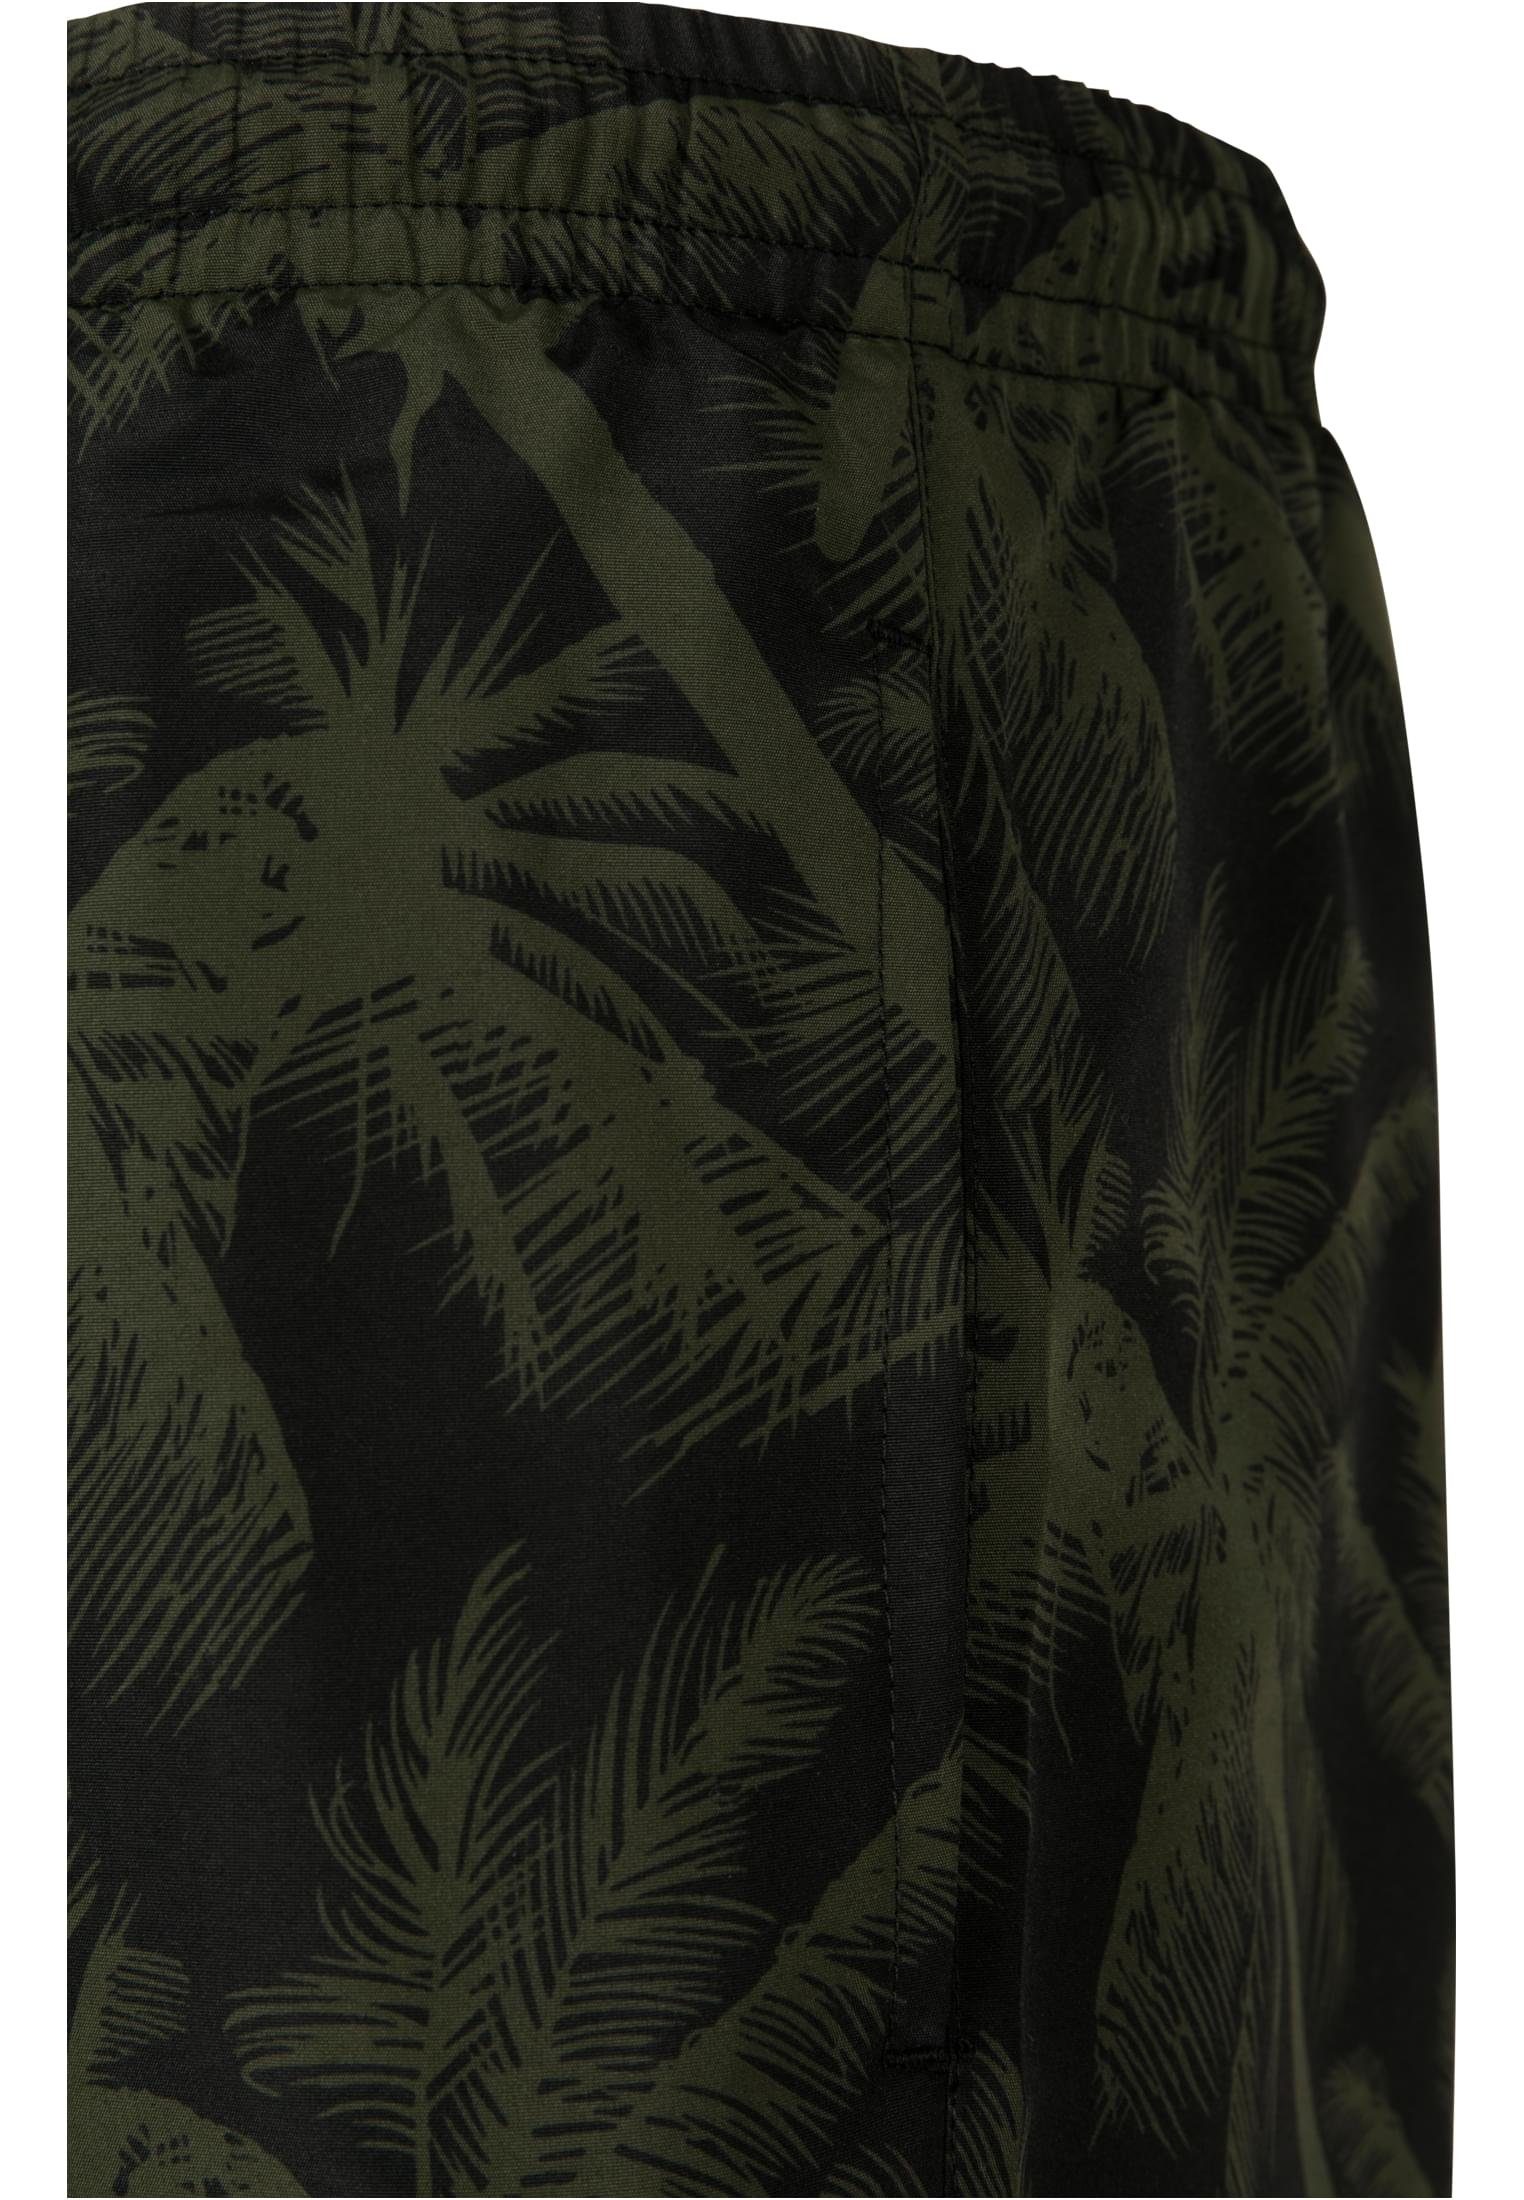 Shorts Herren Swim Pattern CLASSICS URBAN palm/olive Badeshorts